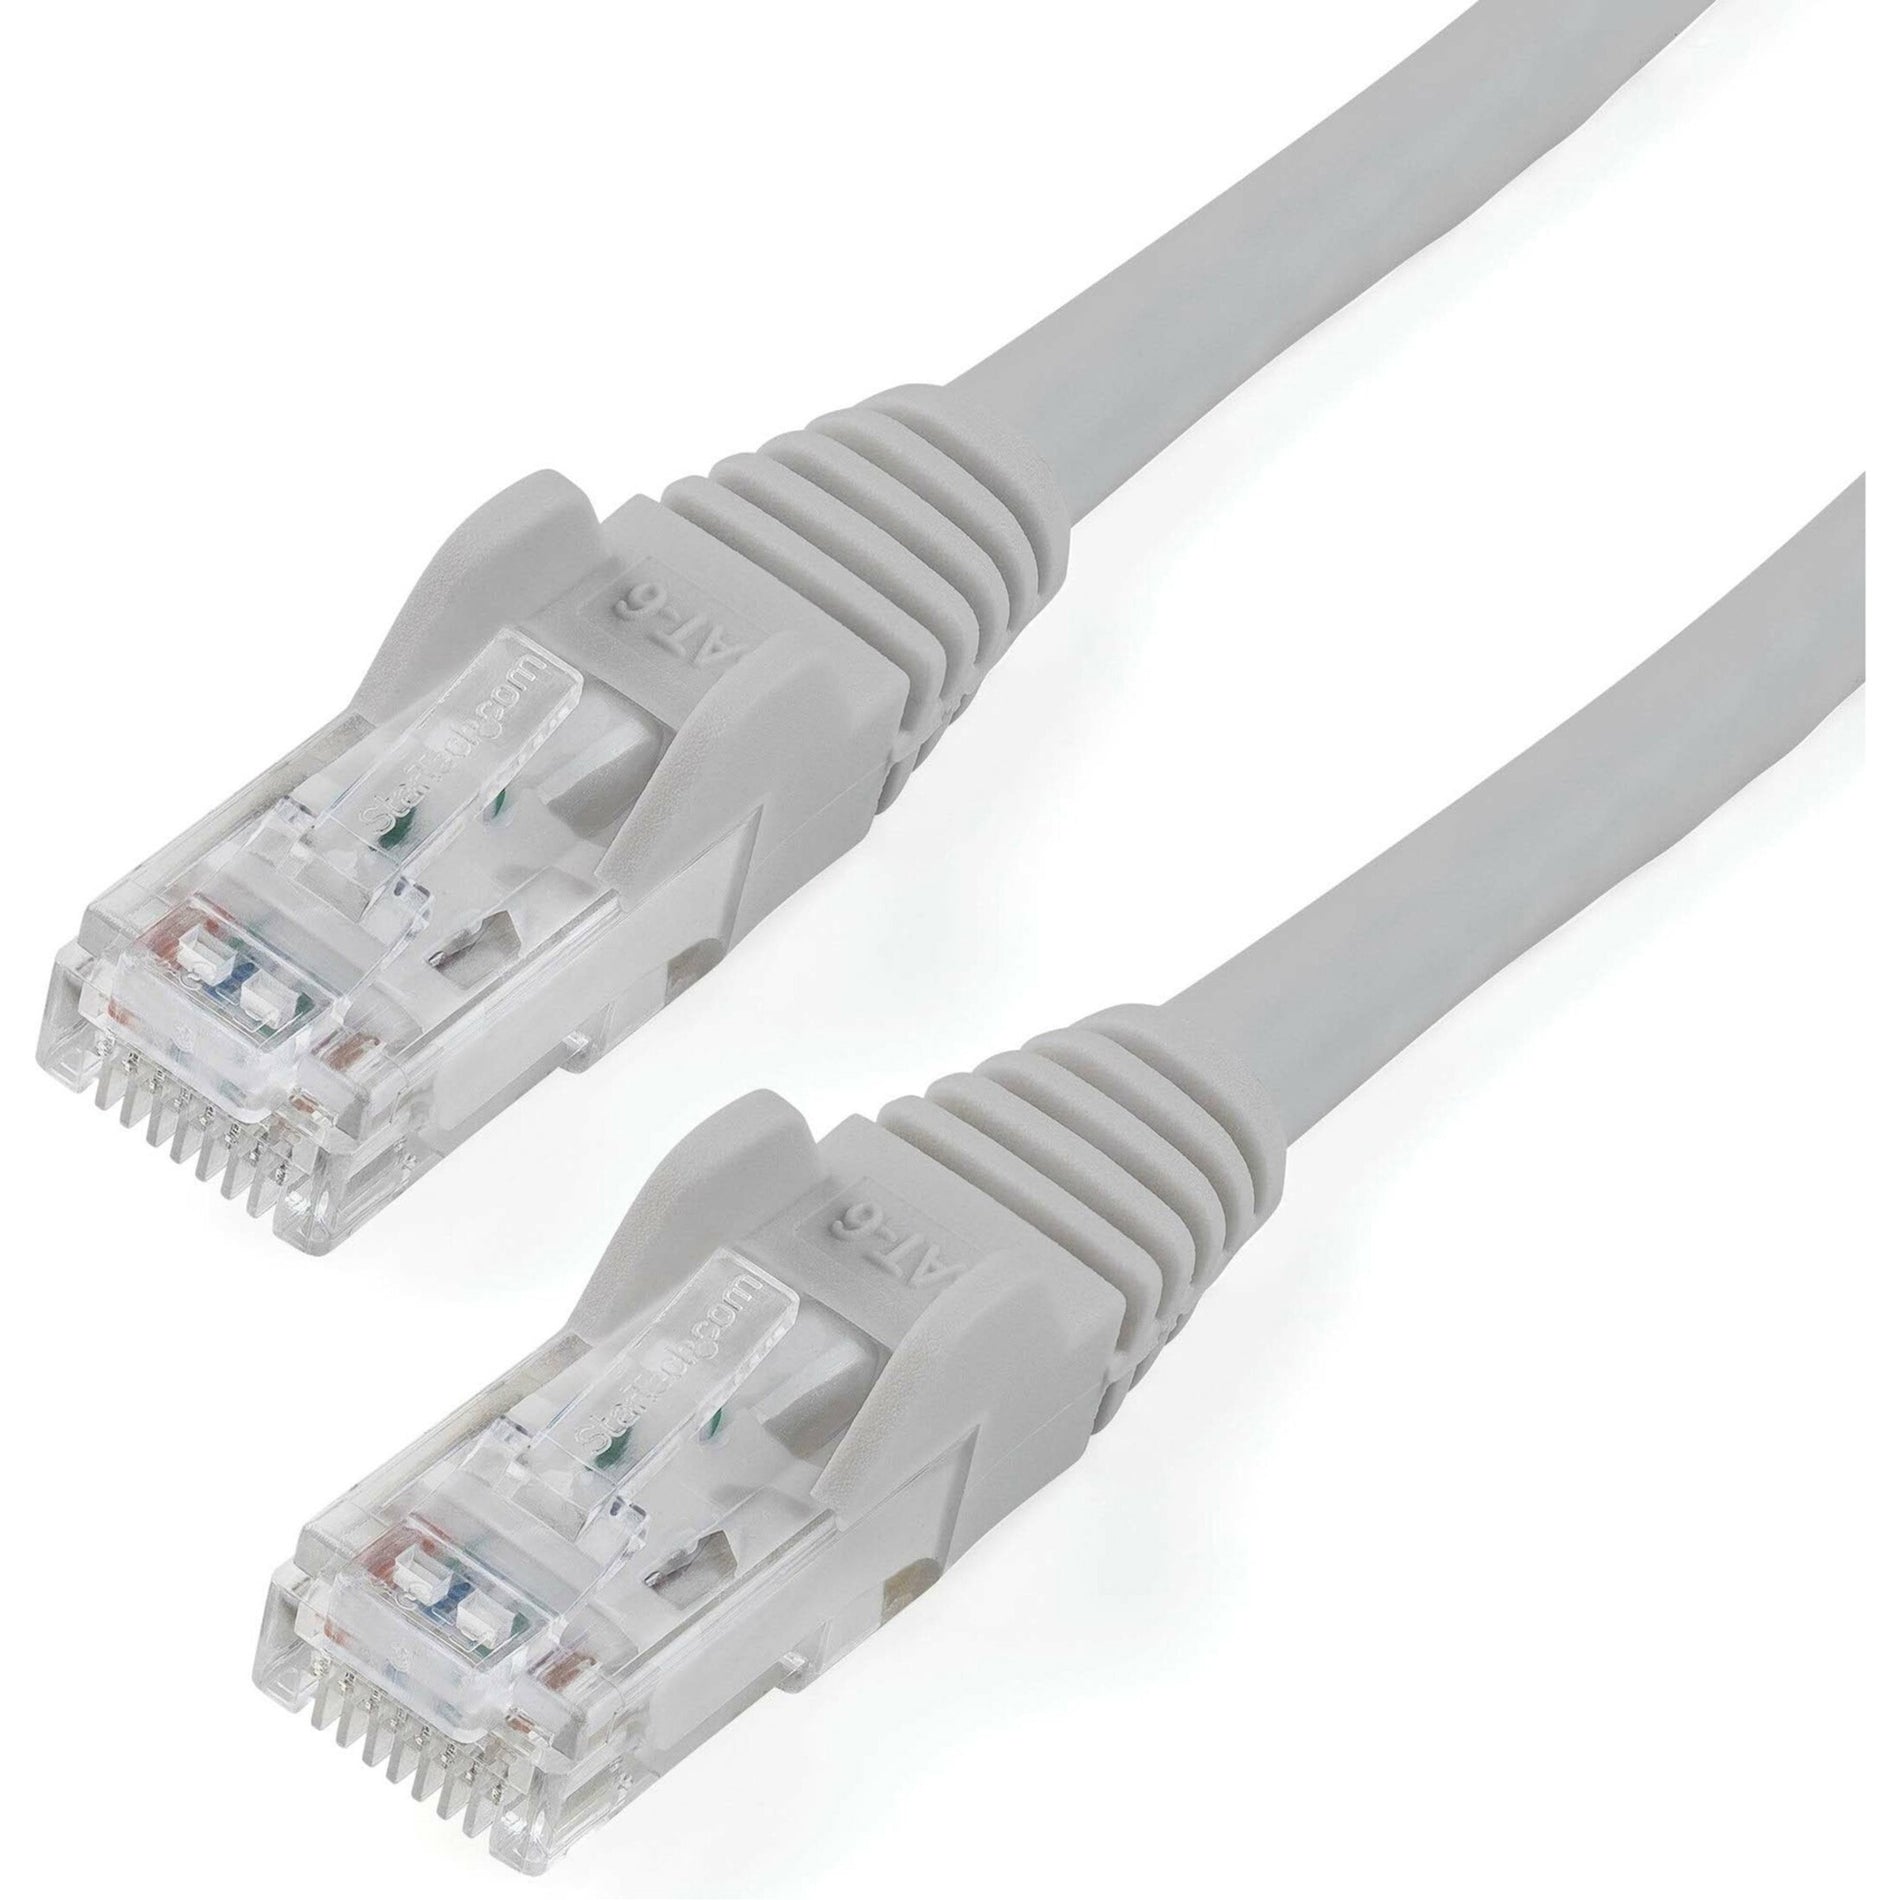 StarTech.com N6PATCH8GR Cat6 Patch Cable, 8 ft Gray Ethernet Cable, Snagless RJ45 Connectors